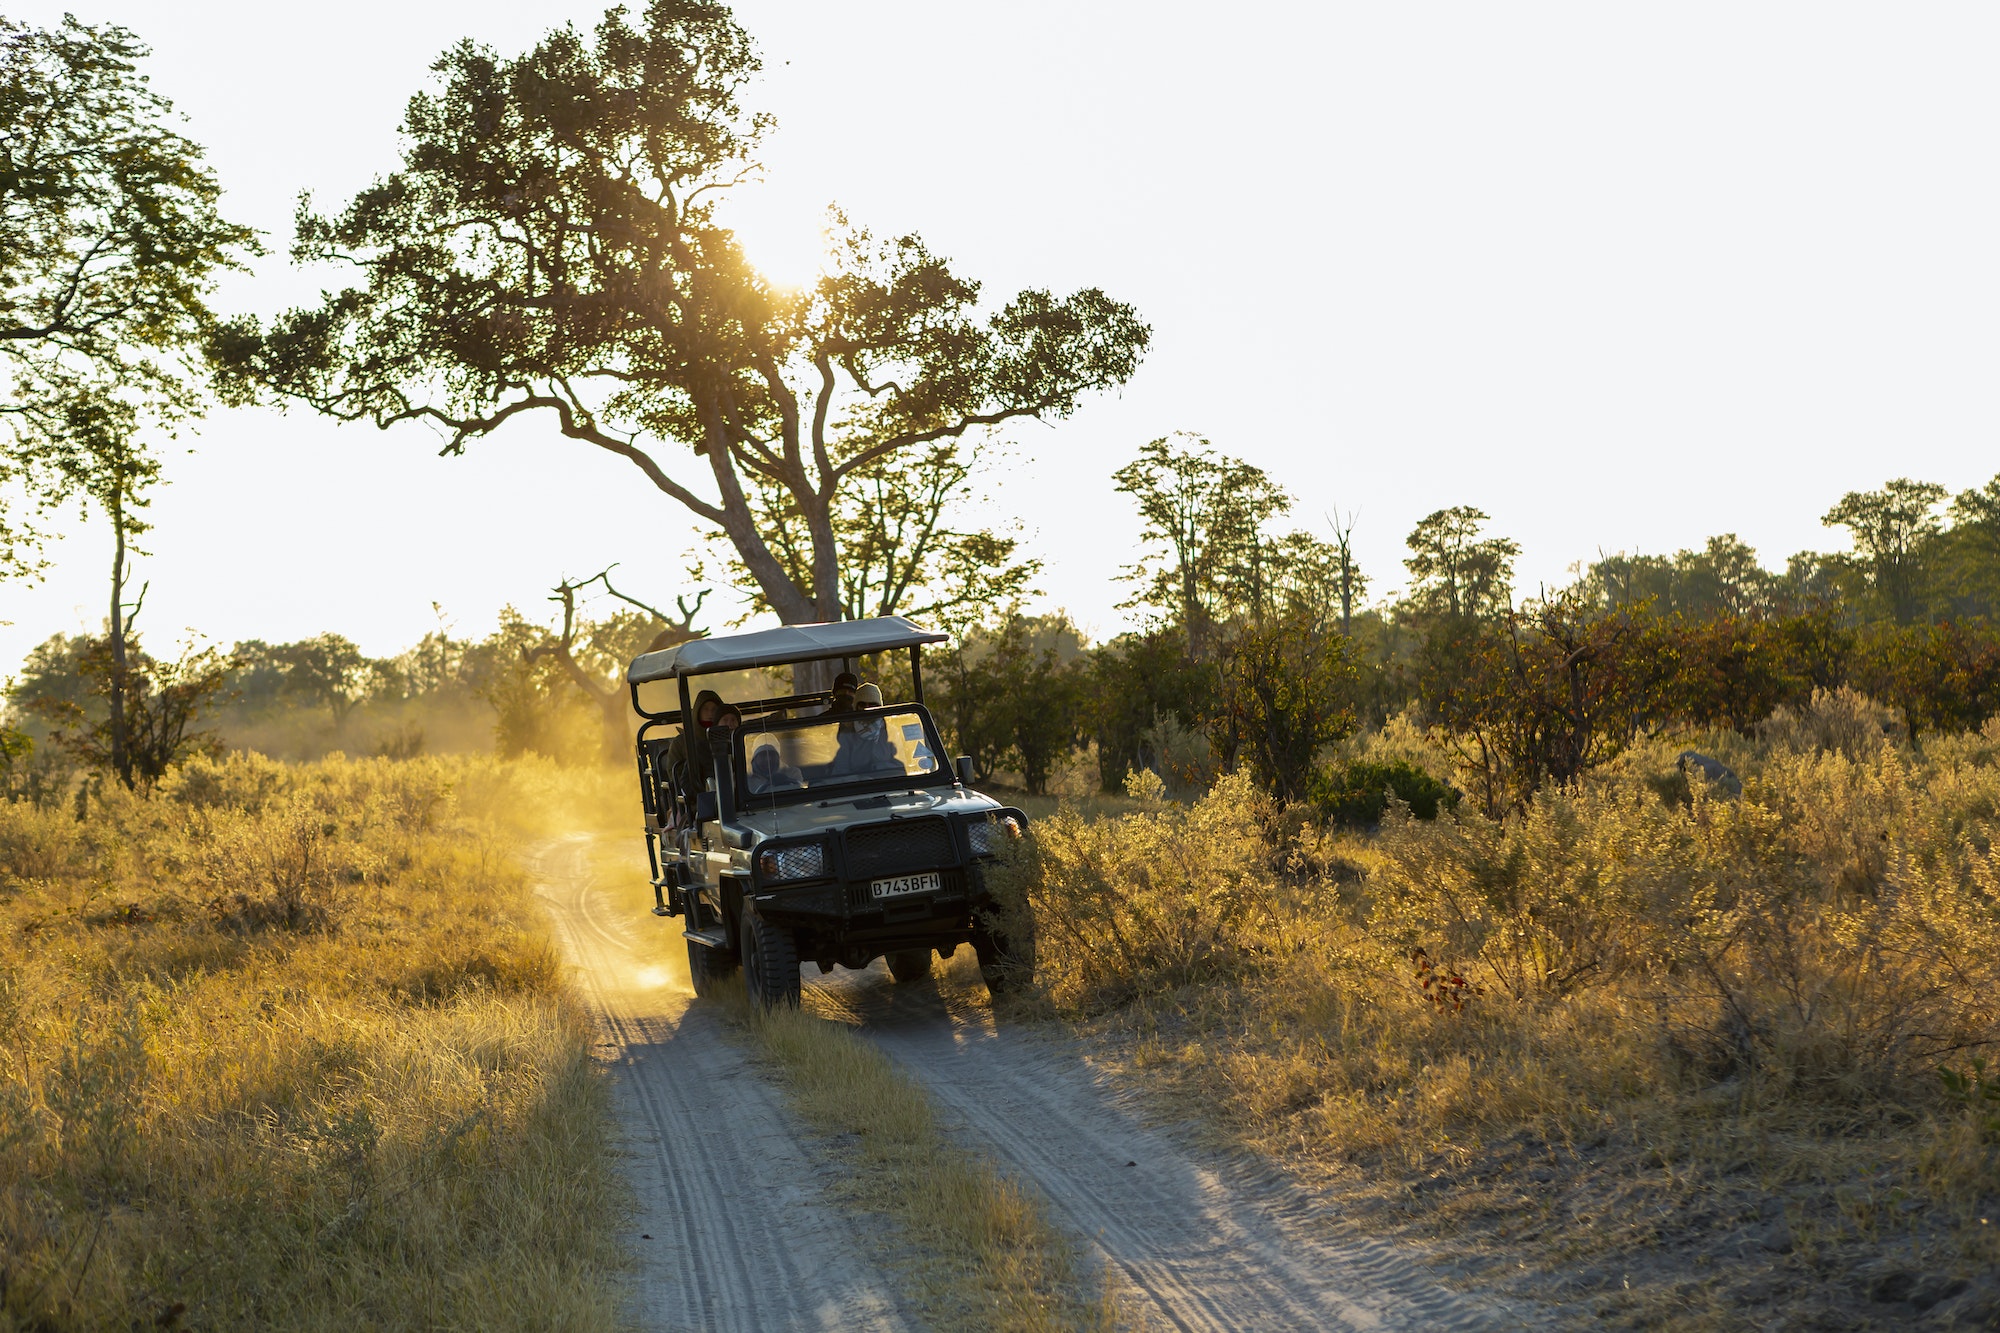 Safari jeep on a dirt road, a sunrise drive